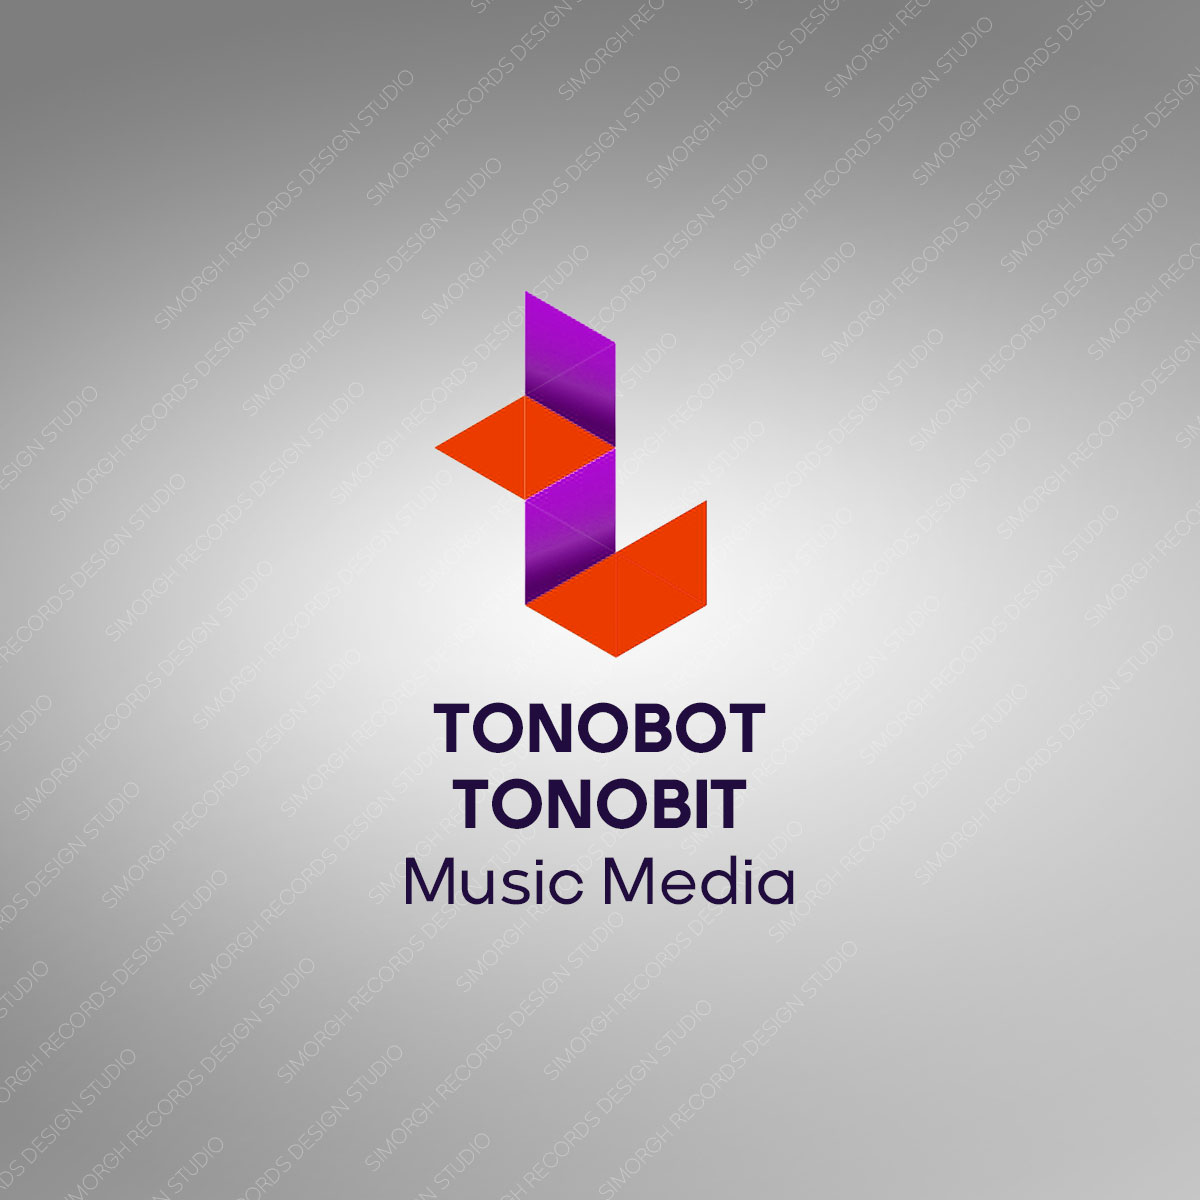 Tonobot-Tonobit